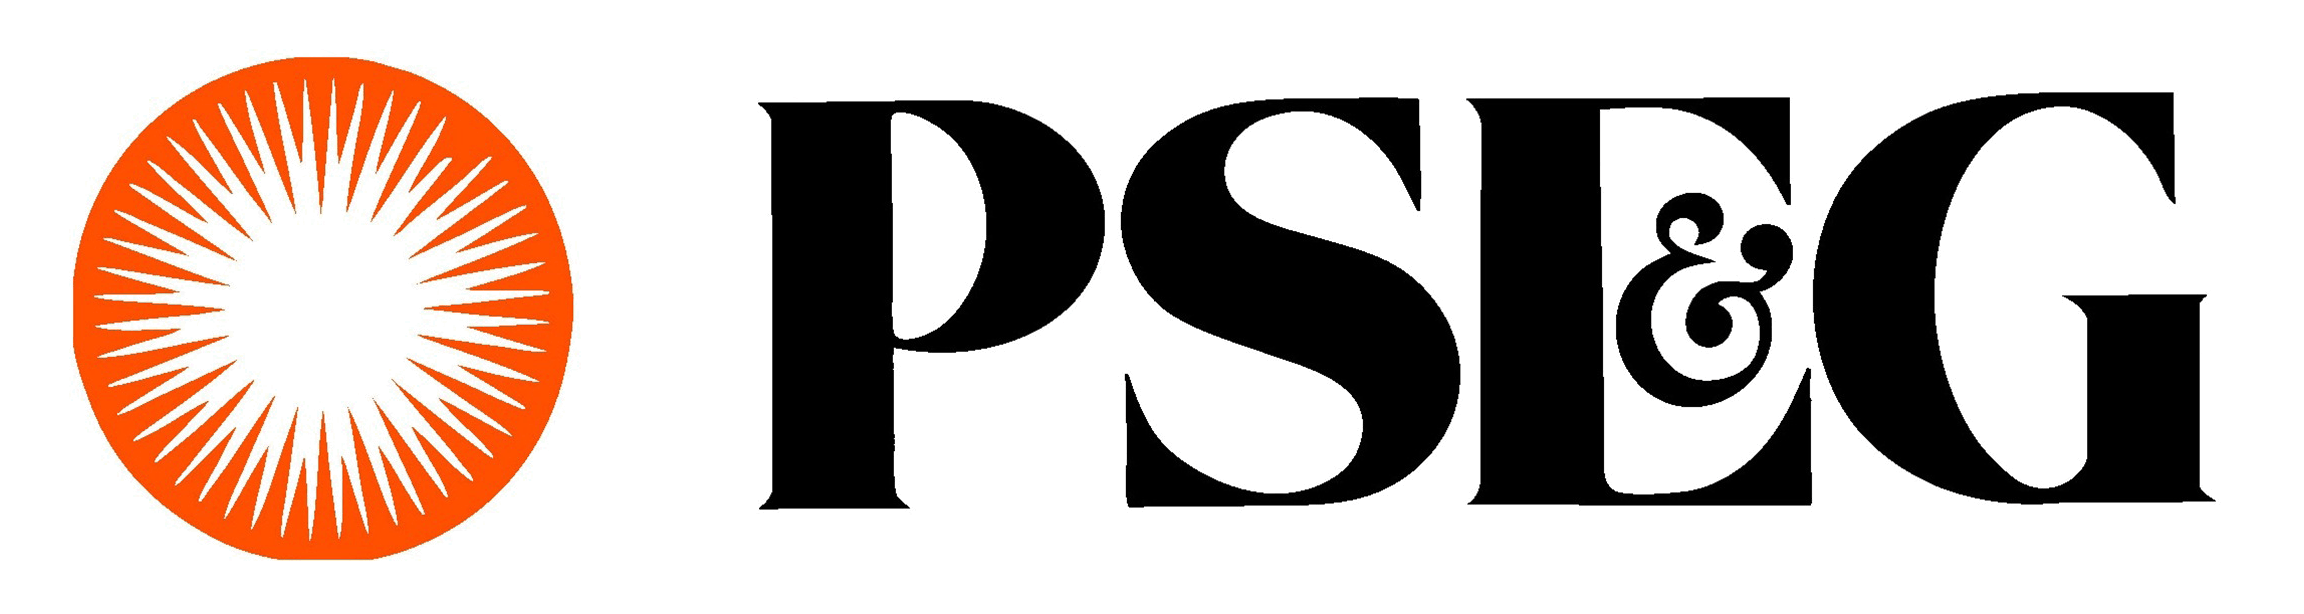 PSEG Logo - PSEG Logo PNG Transparent